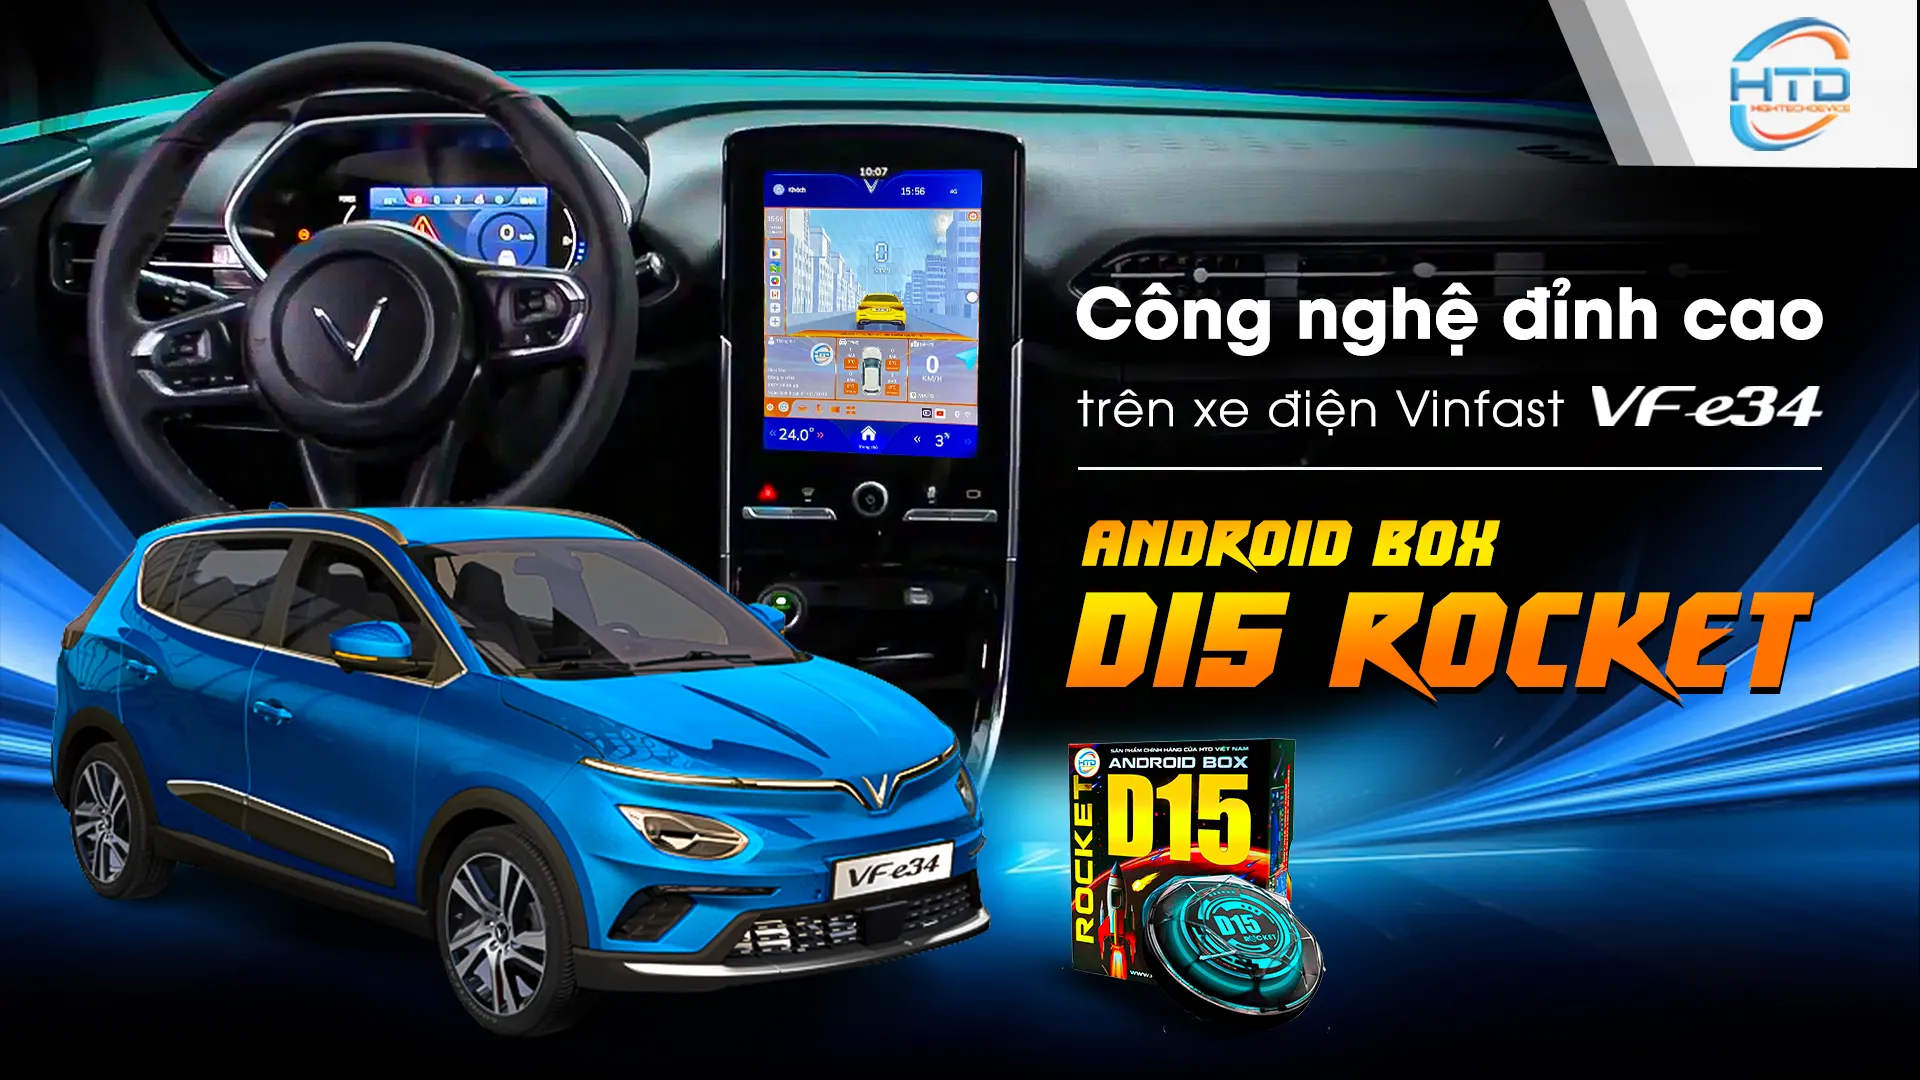 Android Box cho xe điện Vinfast VFe34